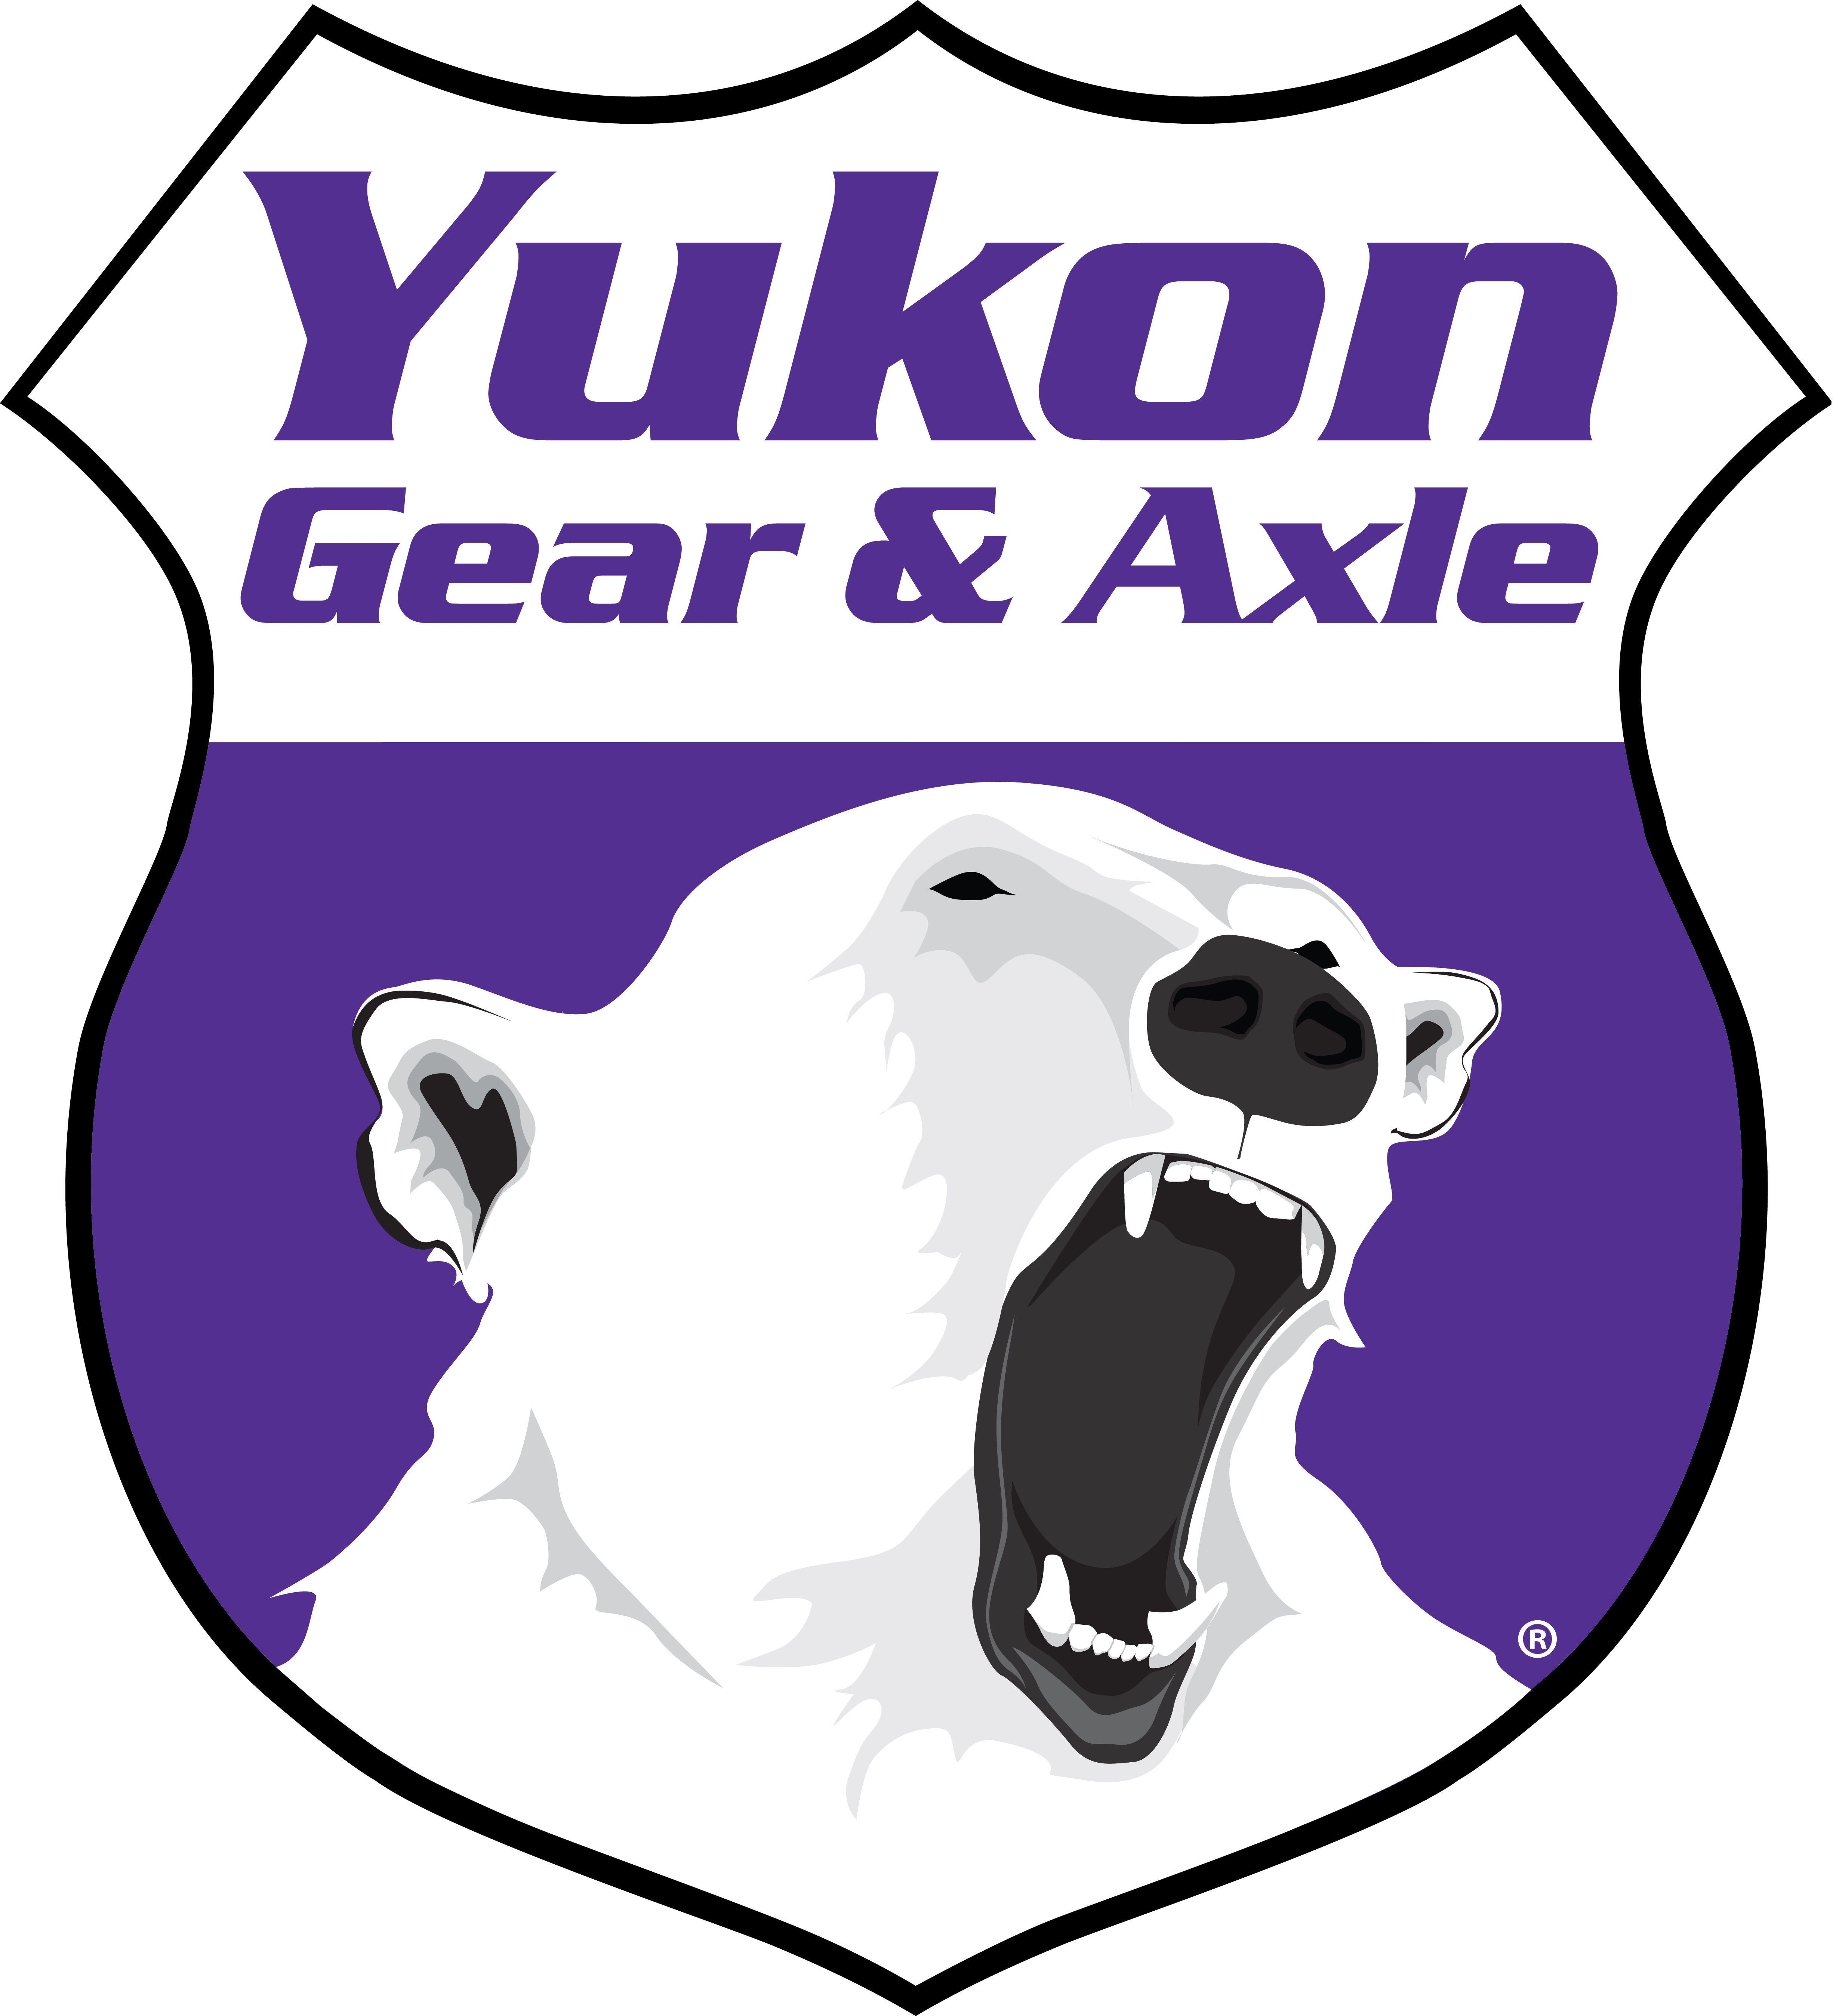 Yukon high performance replacement ring & pinion gear set, Dana 44, 5.89 ratio 